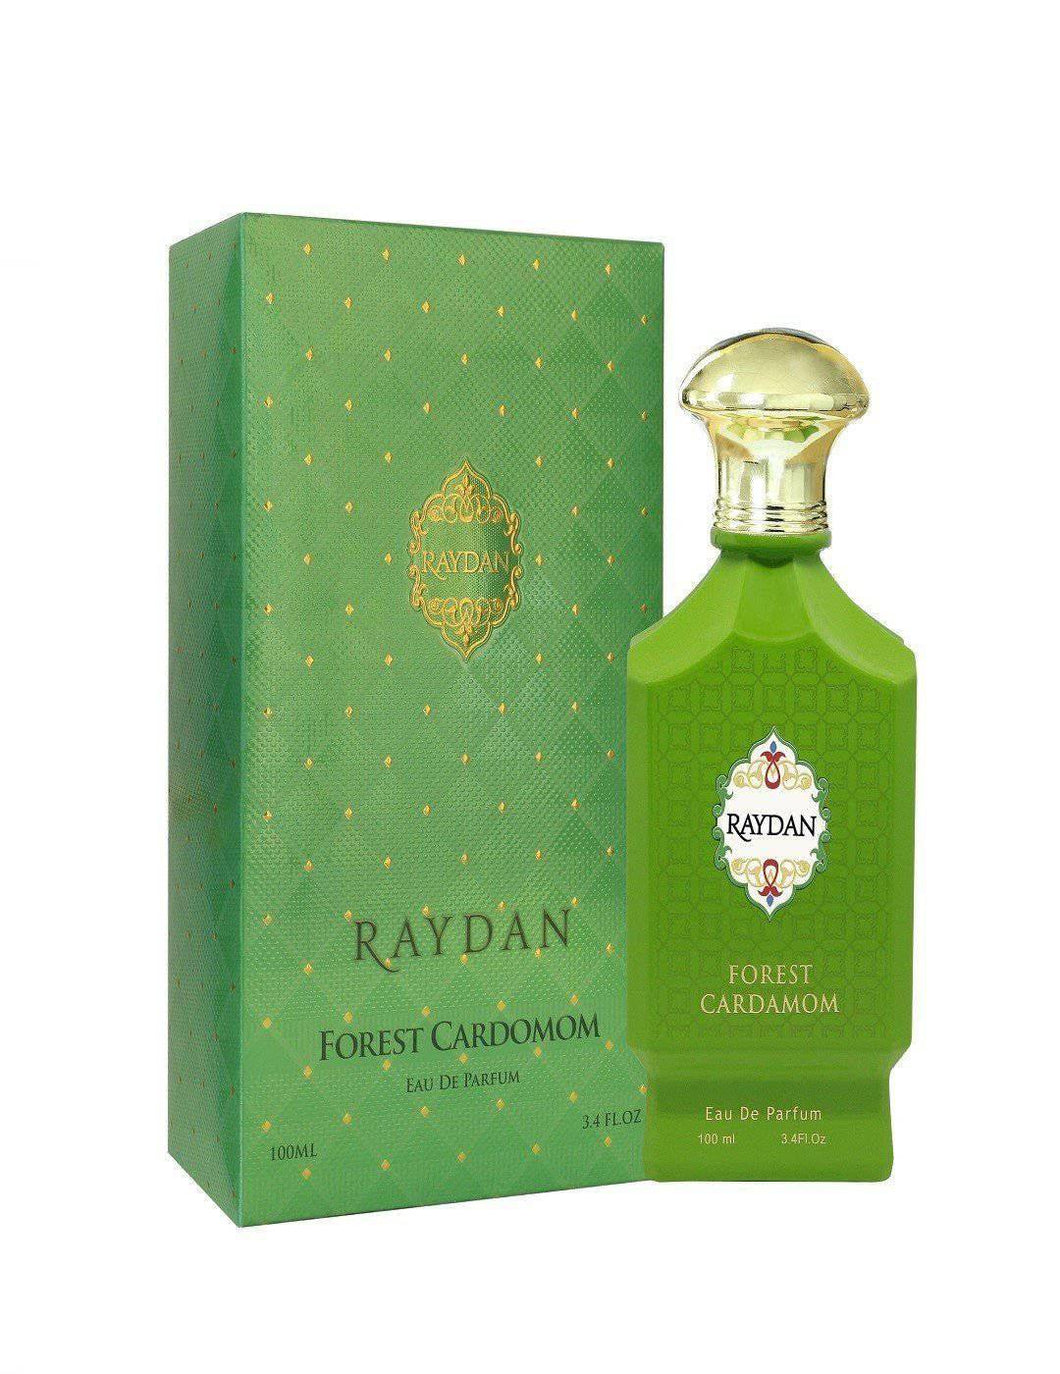 Raydan FOREST CARDAMON perfume 100ml